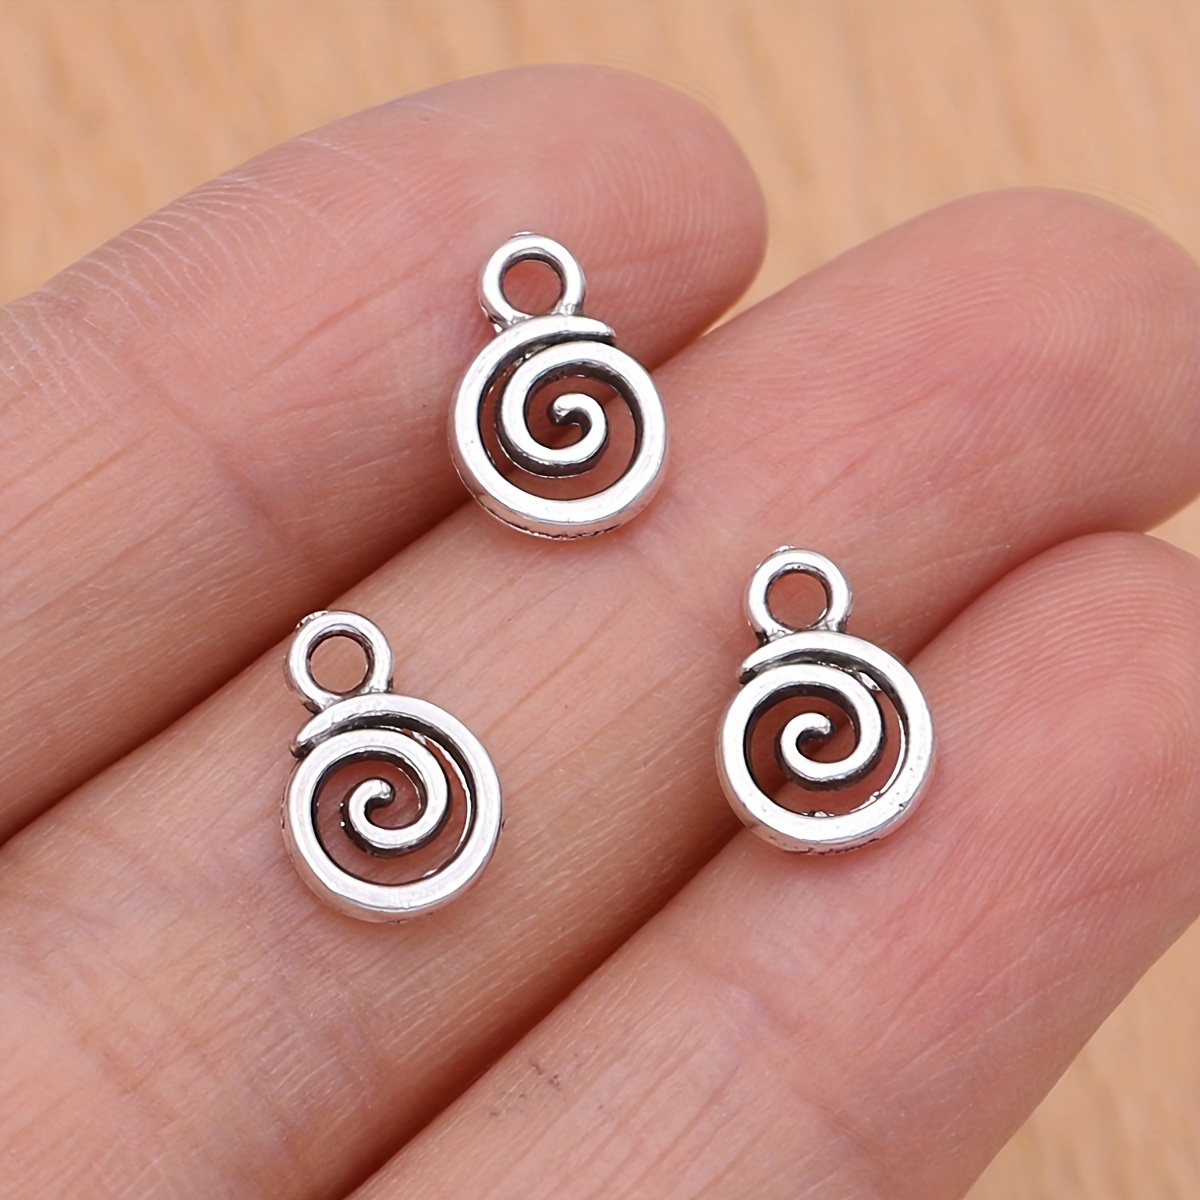 Spiral Pendant Necklace Swirls, Jewelry Making Findings